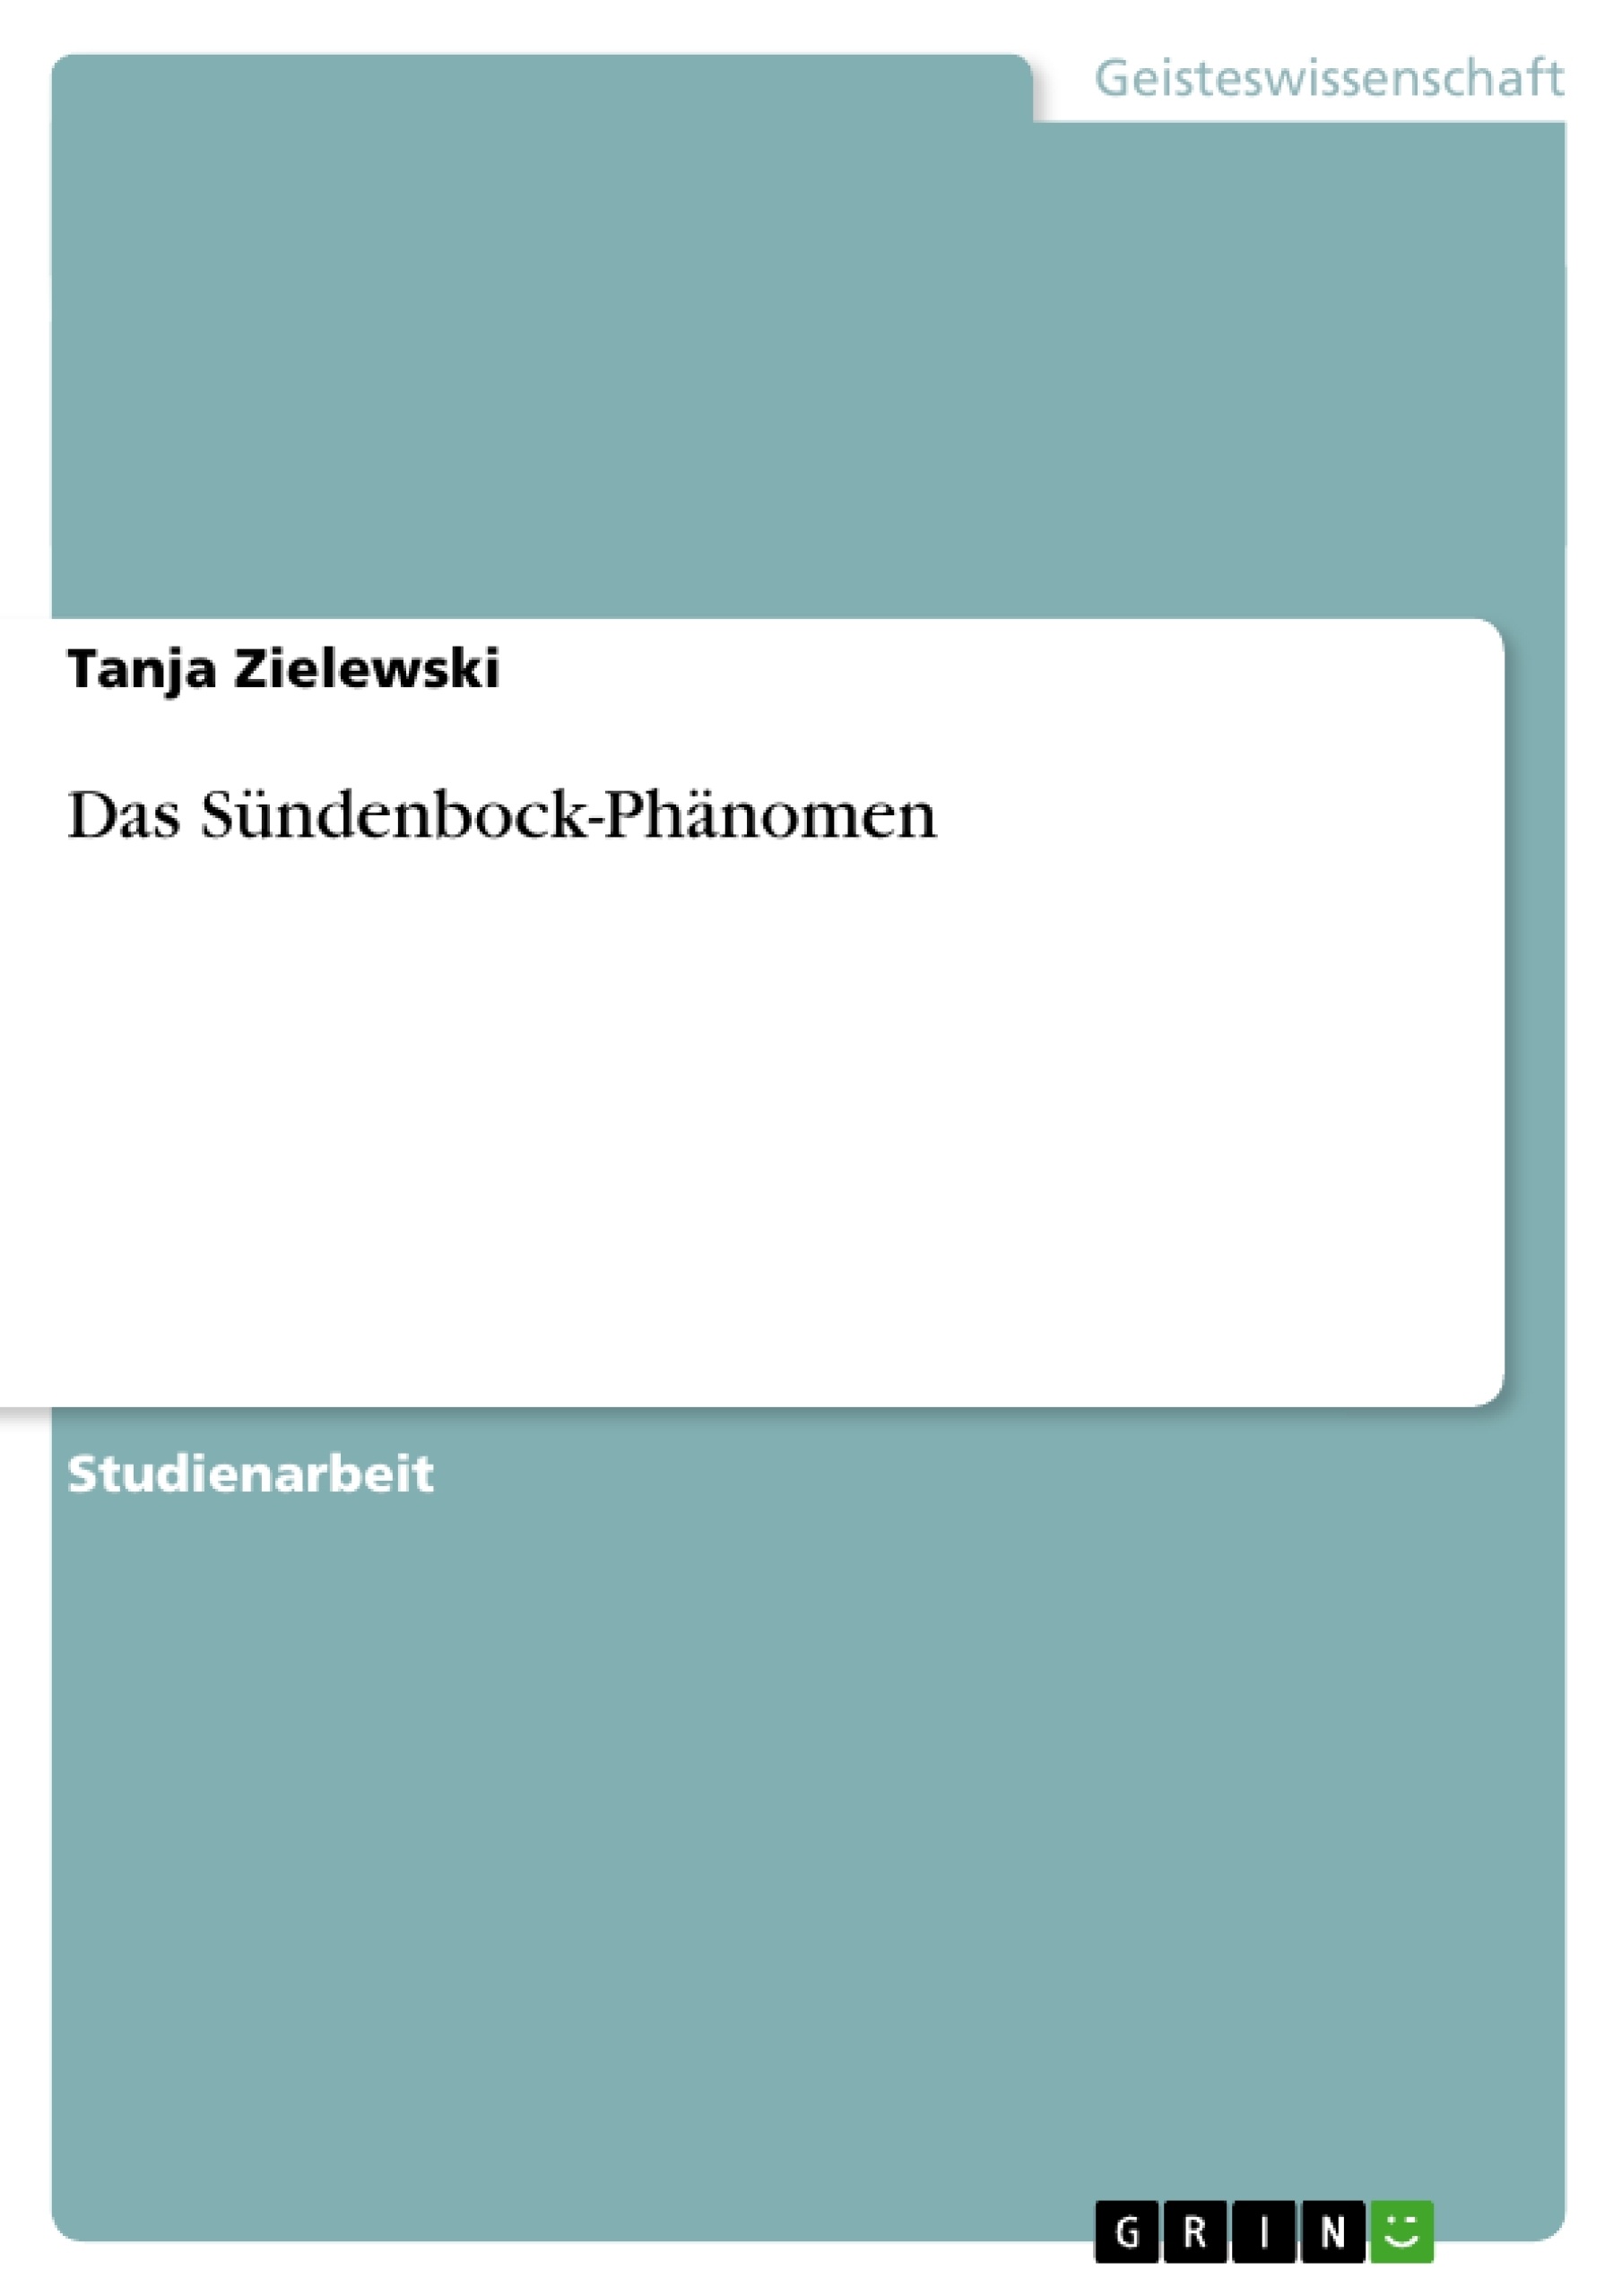 Título: Das Sündenbock-Phänomen